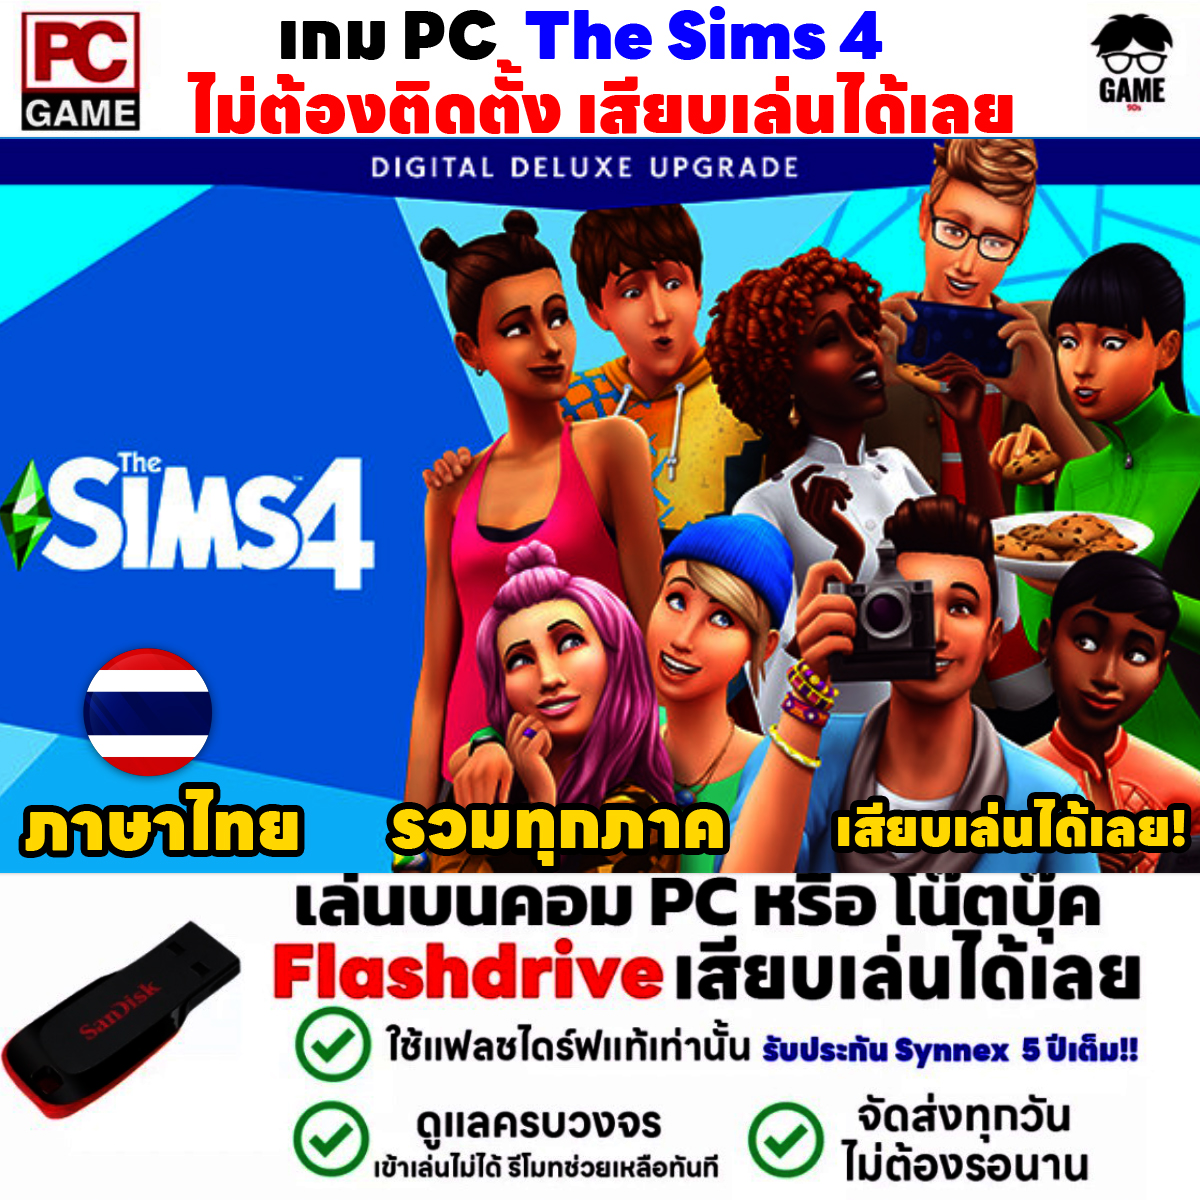 The Sims Thailand - เว็บ cdkeys.com ตอนนี้มีโปรสำหรับ The Sims 4